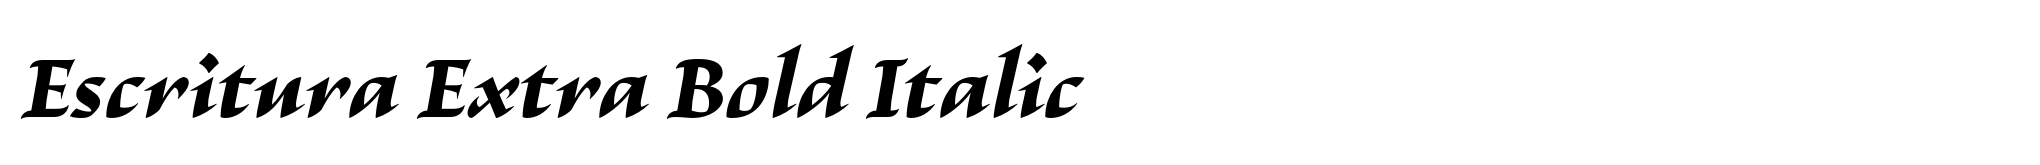 Escritura Extra Bold Italic image